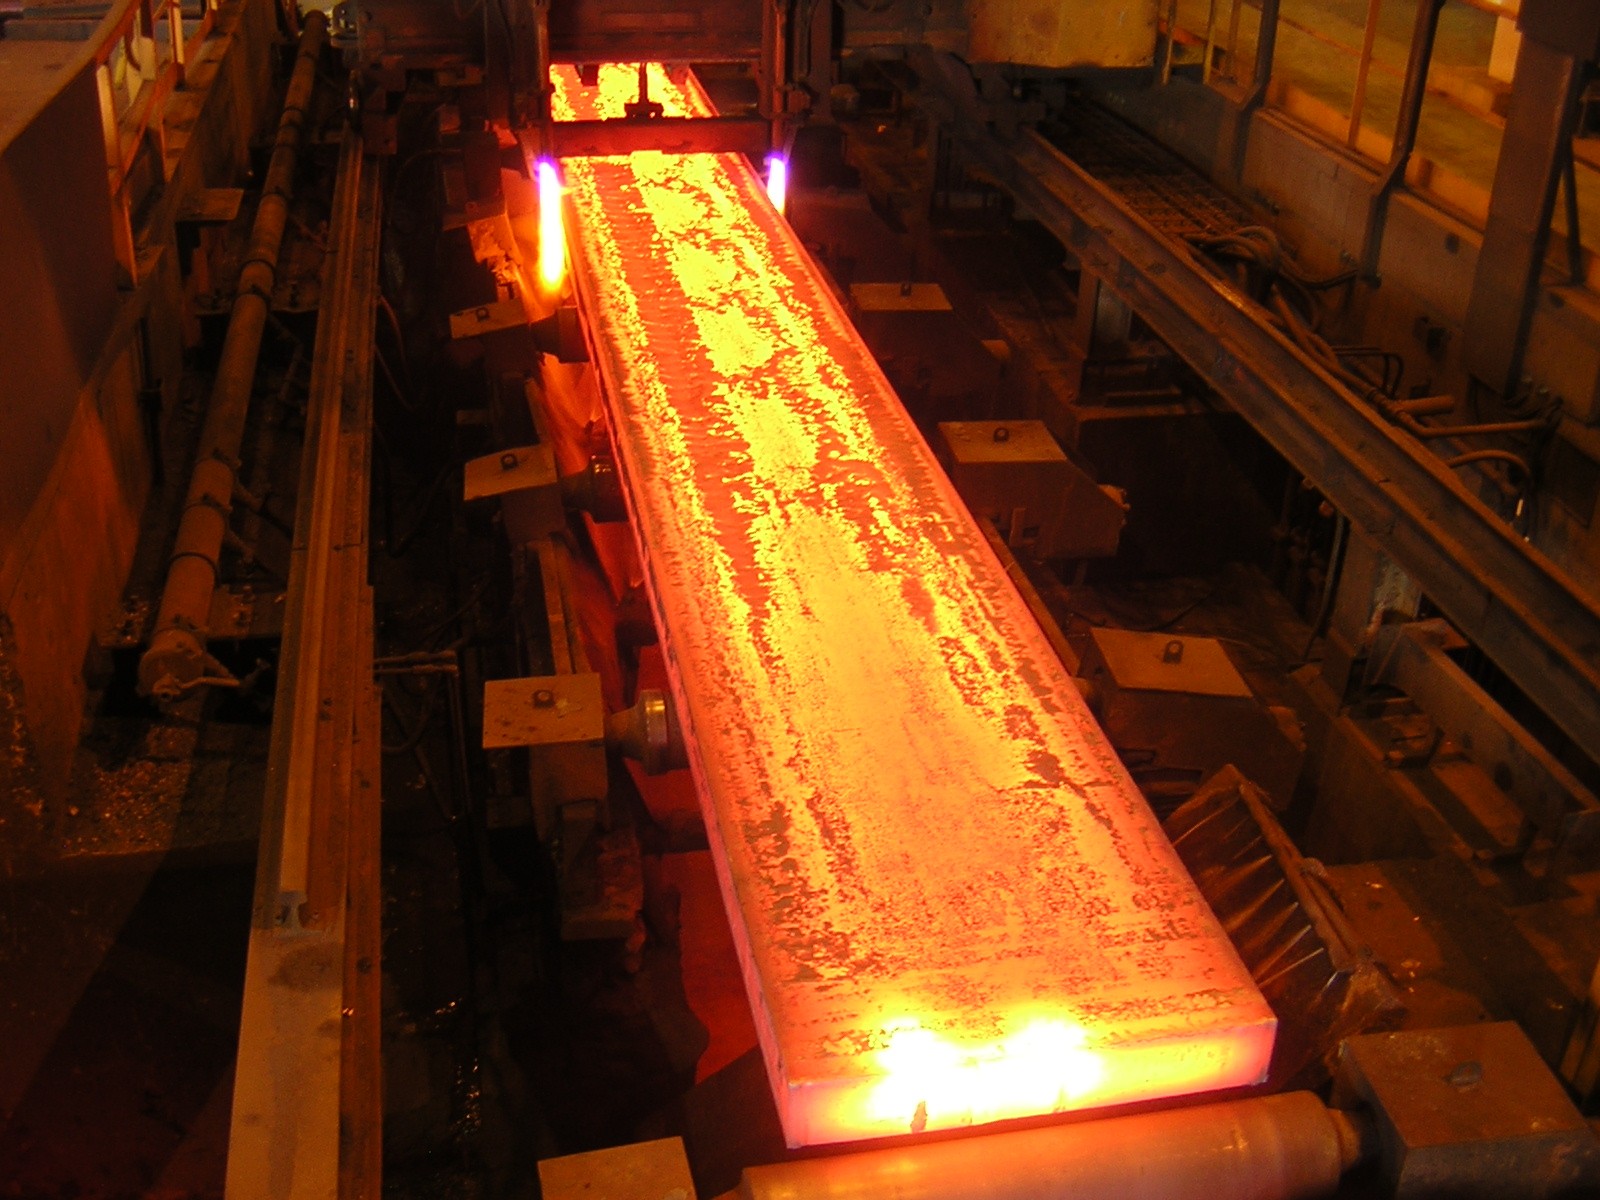 NZ Steel, Norke Skog, Bathurst work to settle lockdown production